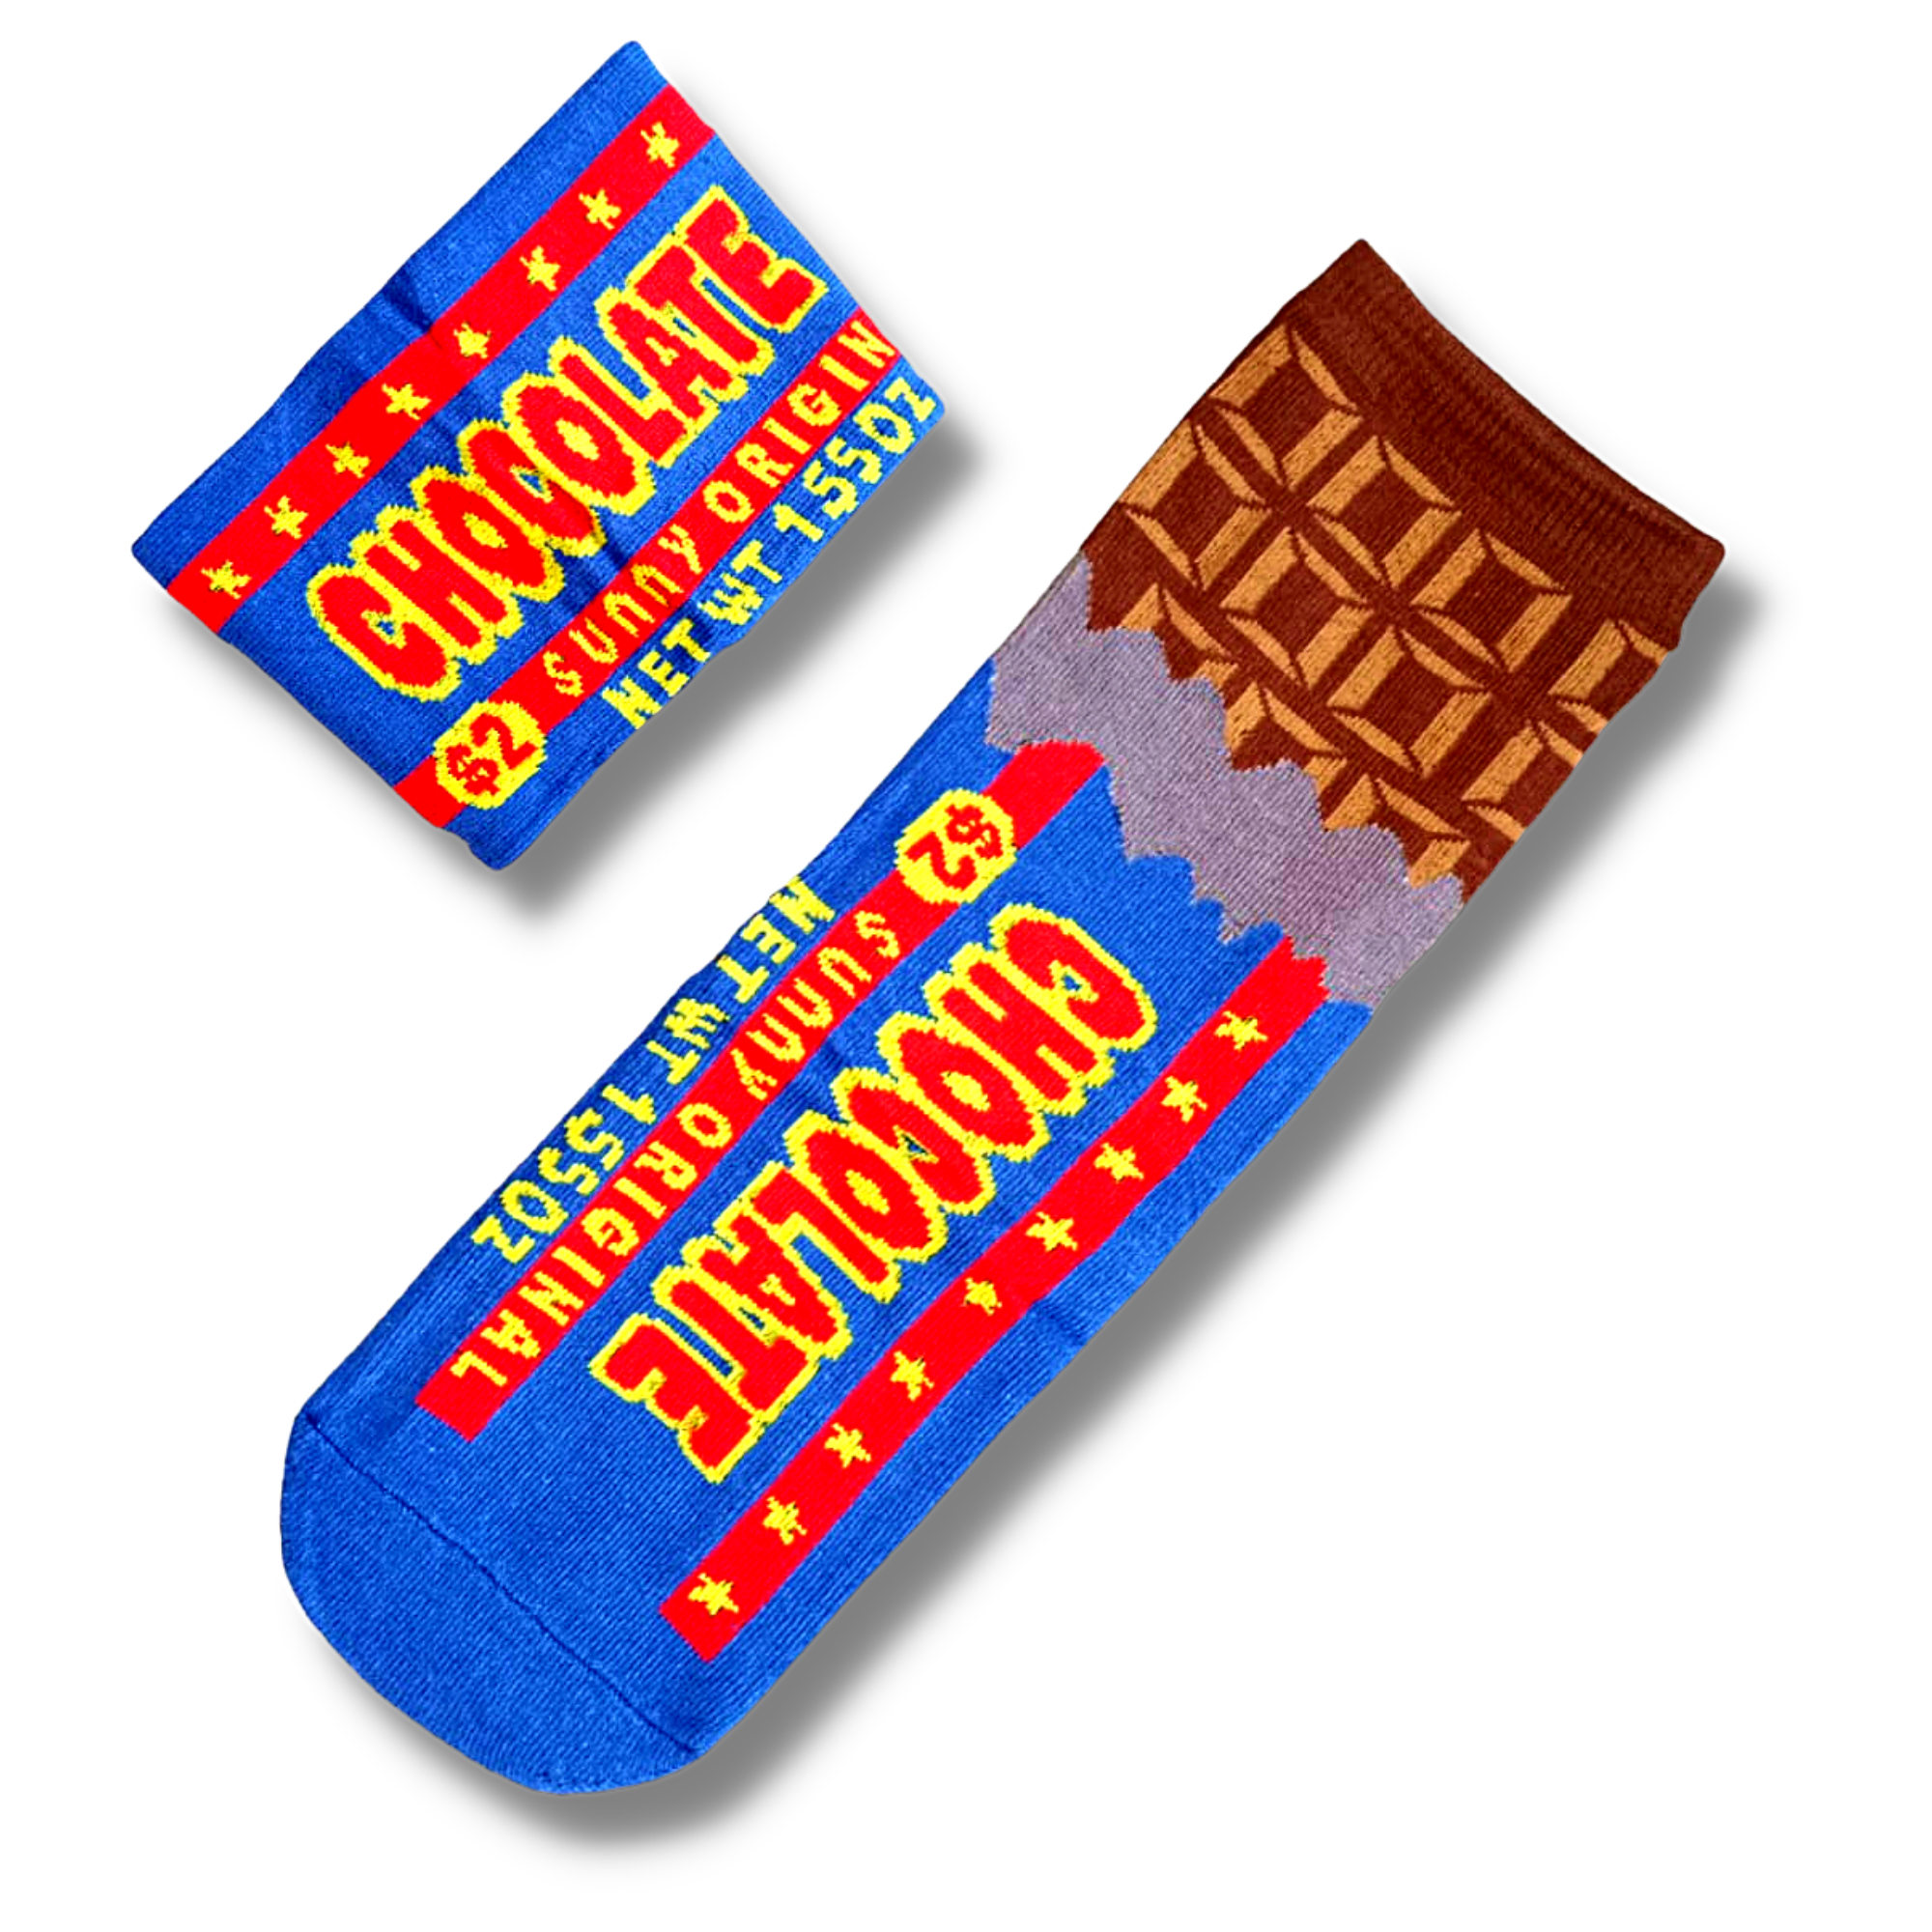 Chocolate Bar Men's Socks (Size 8-12)